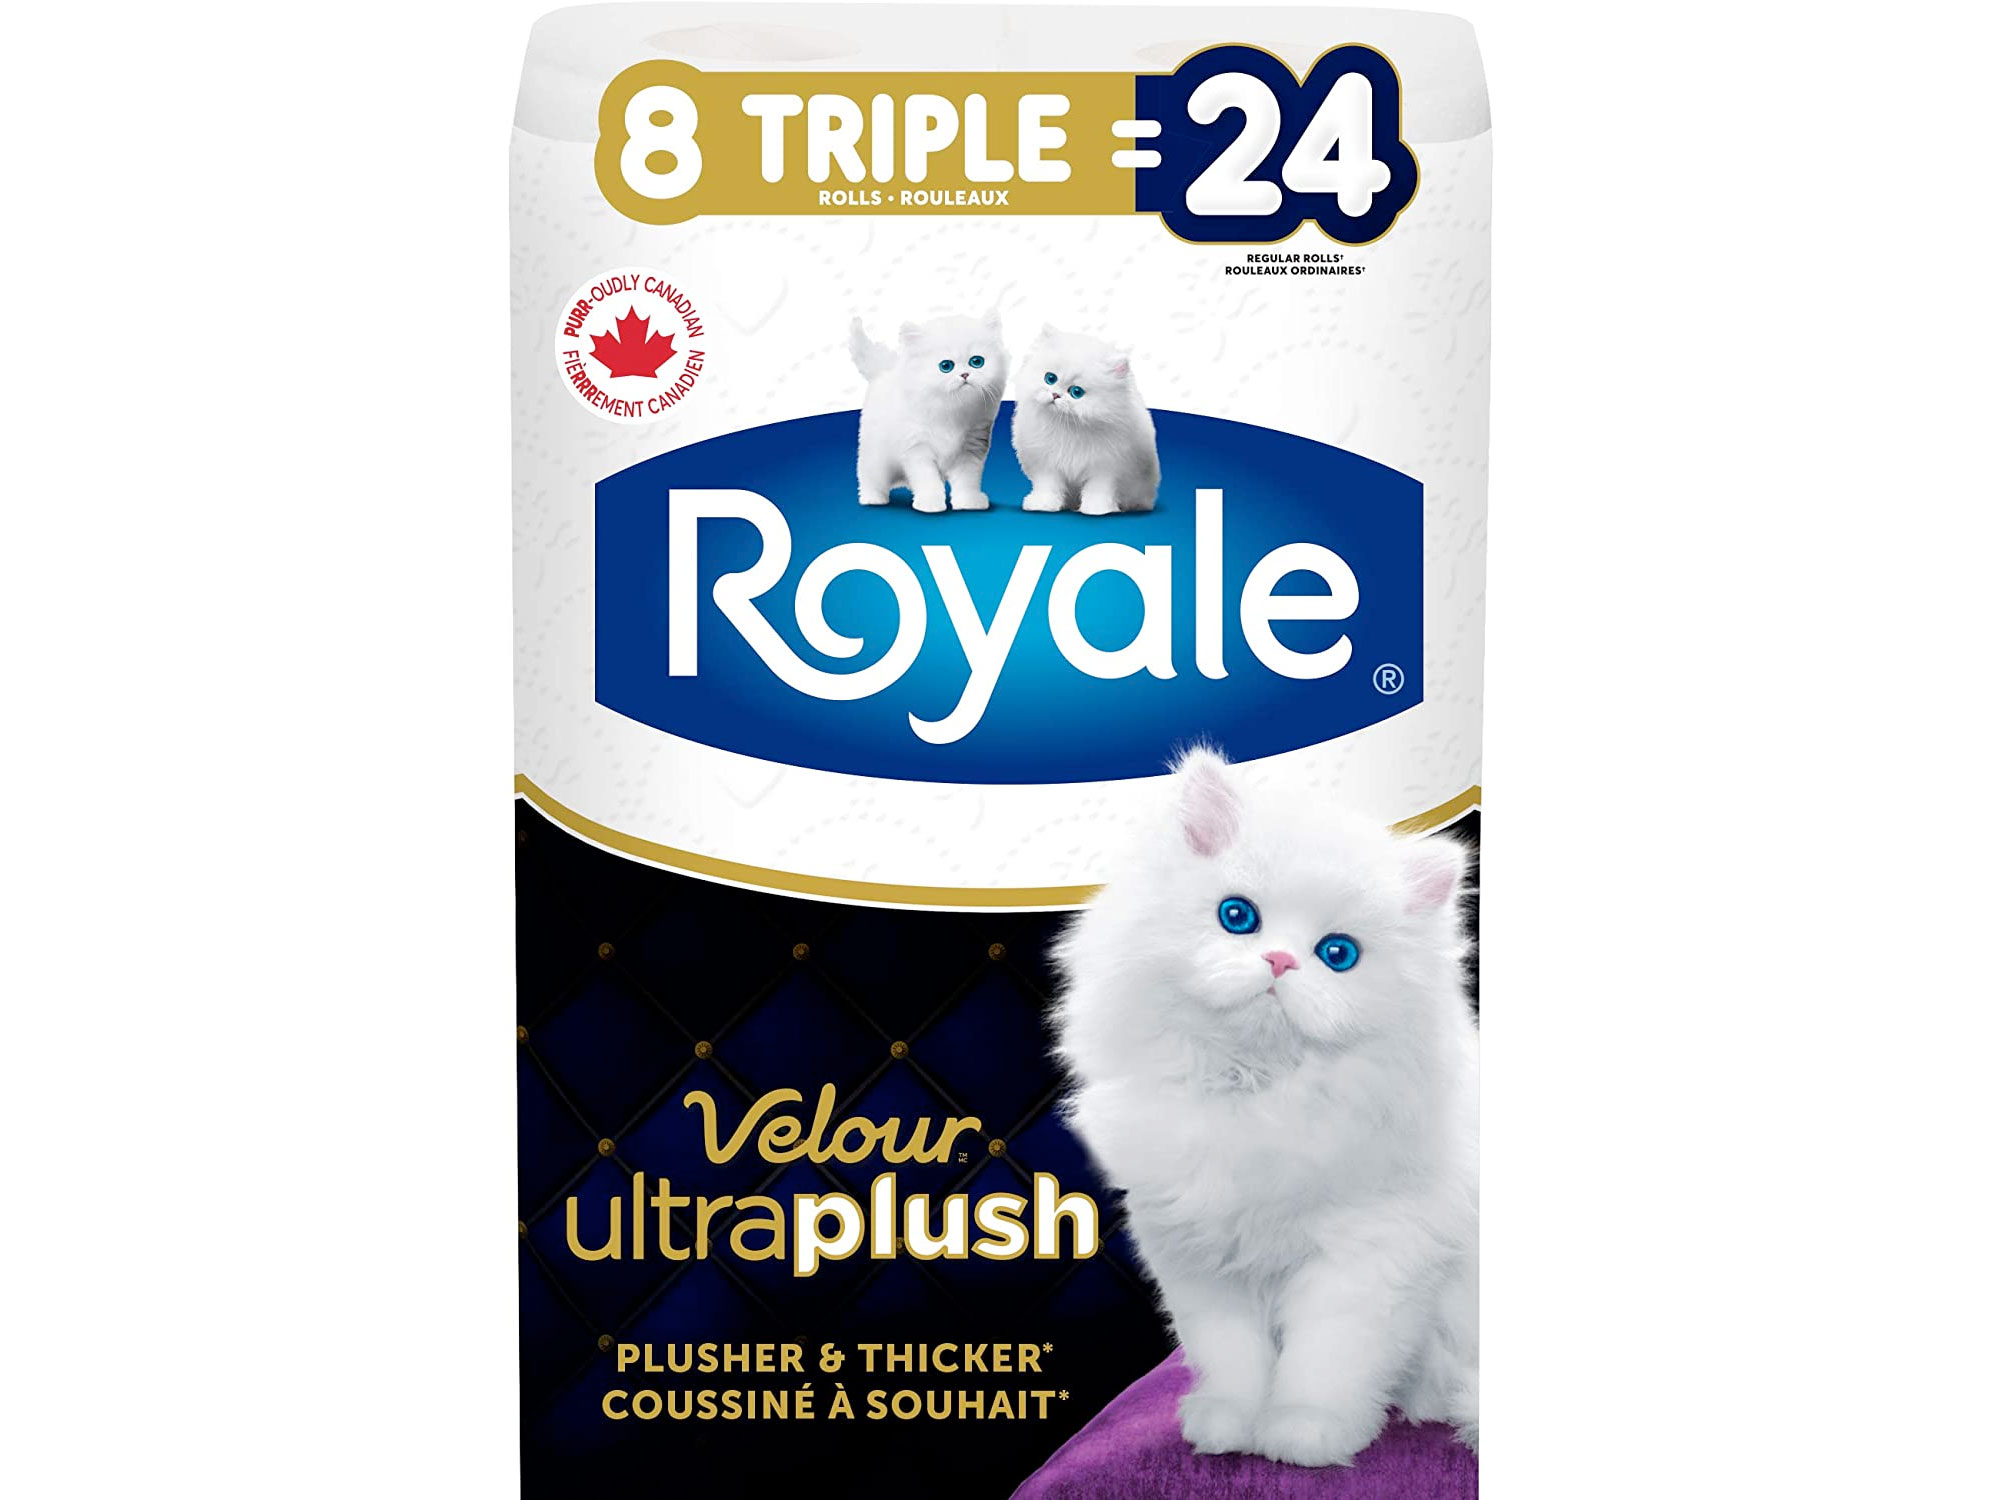 Amazon：Royale Velour Ultra Plush Toilet Paper 8 Triple Rolls (24 Regular Rolls)只賣$5.99